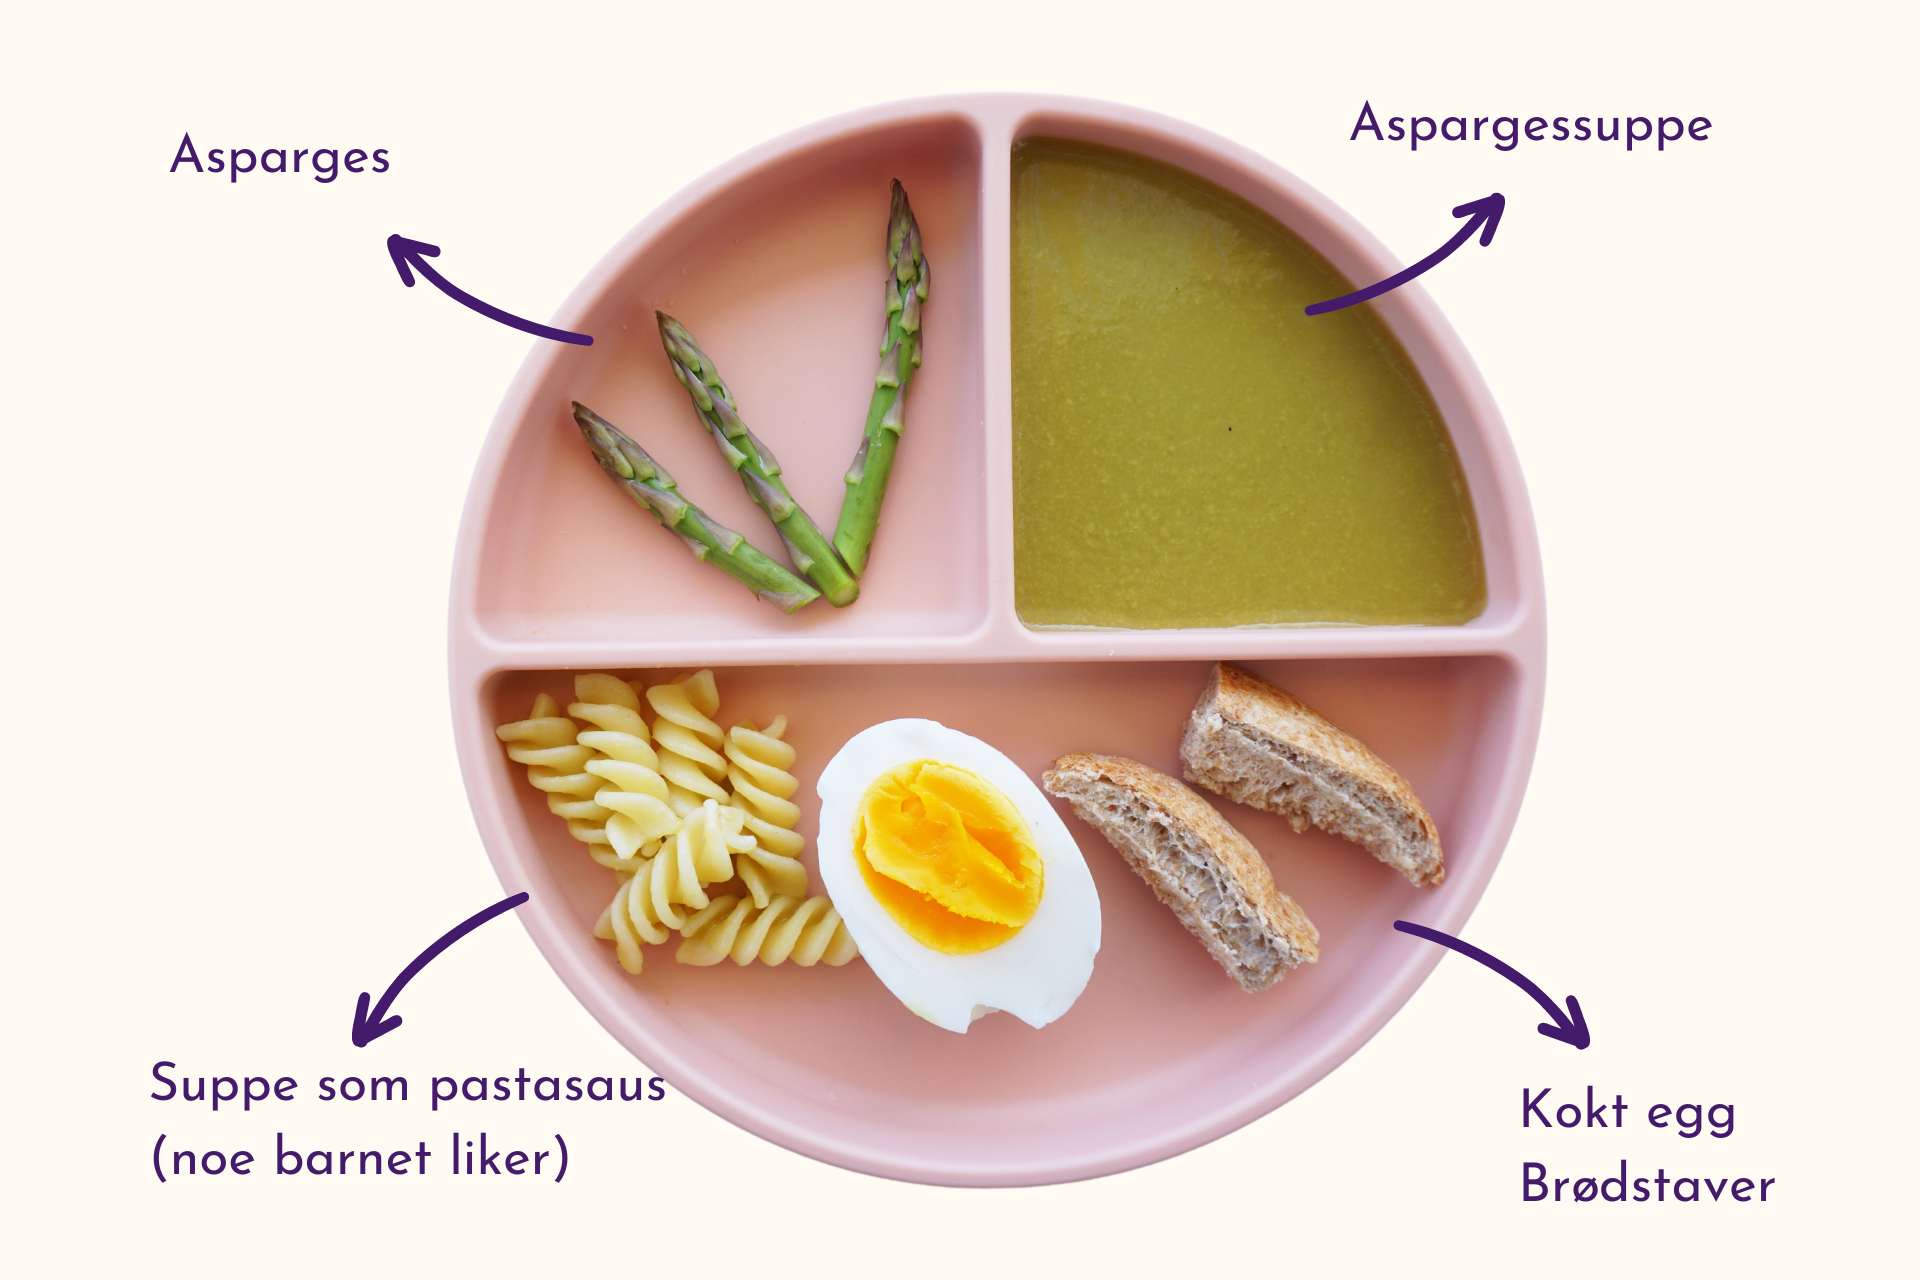 Barnevennlig Aspargessuppe med krutonger og egg